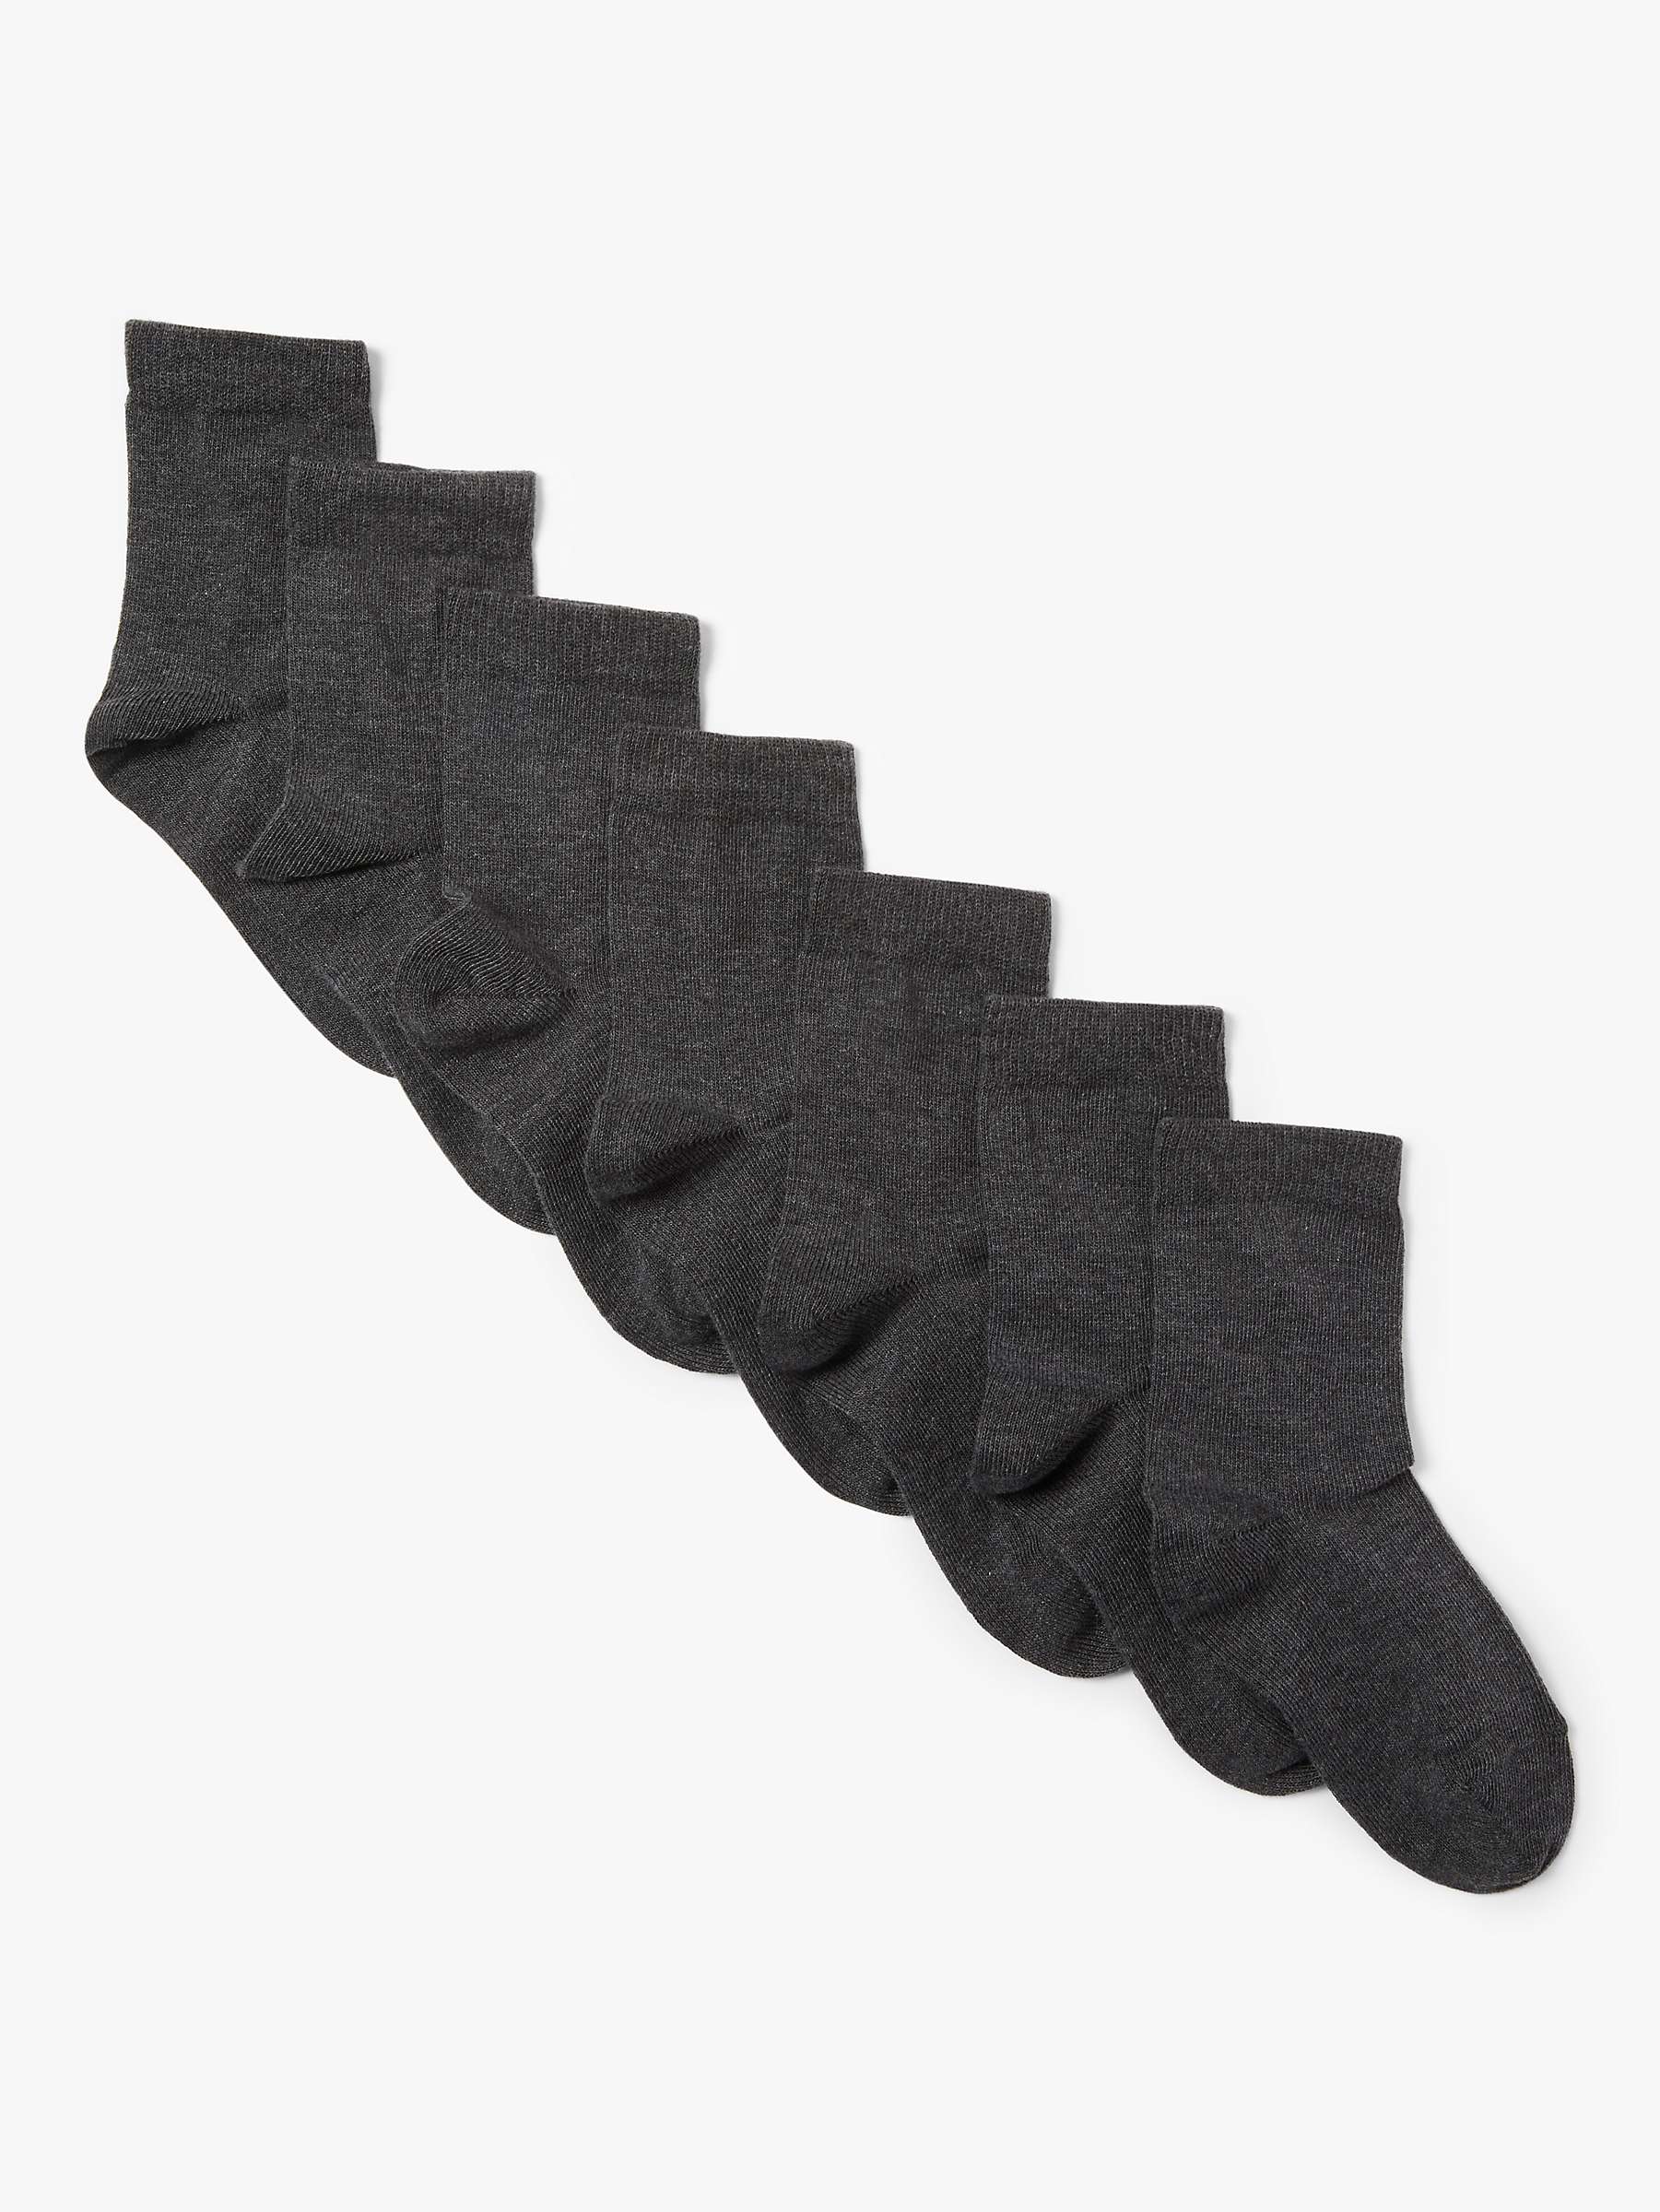 Buy John Lewis Kids' Cotton Rich Socks, Pack of 7 Online at johnlewis.com